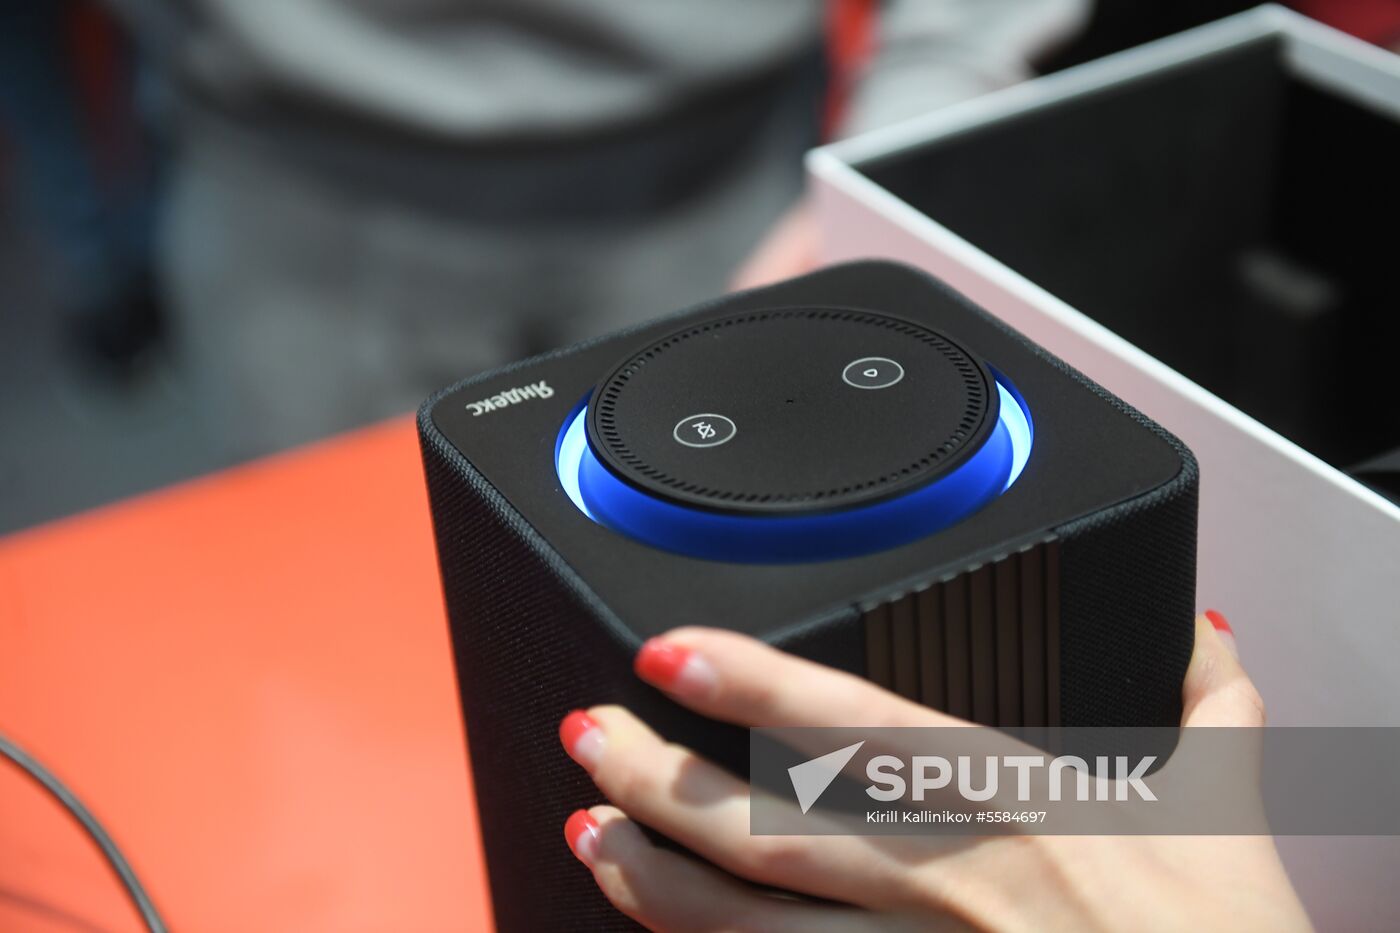 Yandex smart speaker goes on sale